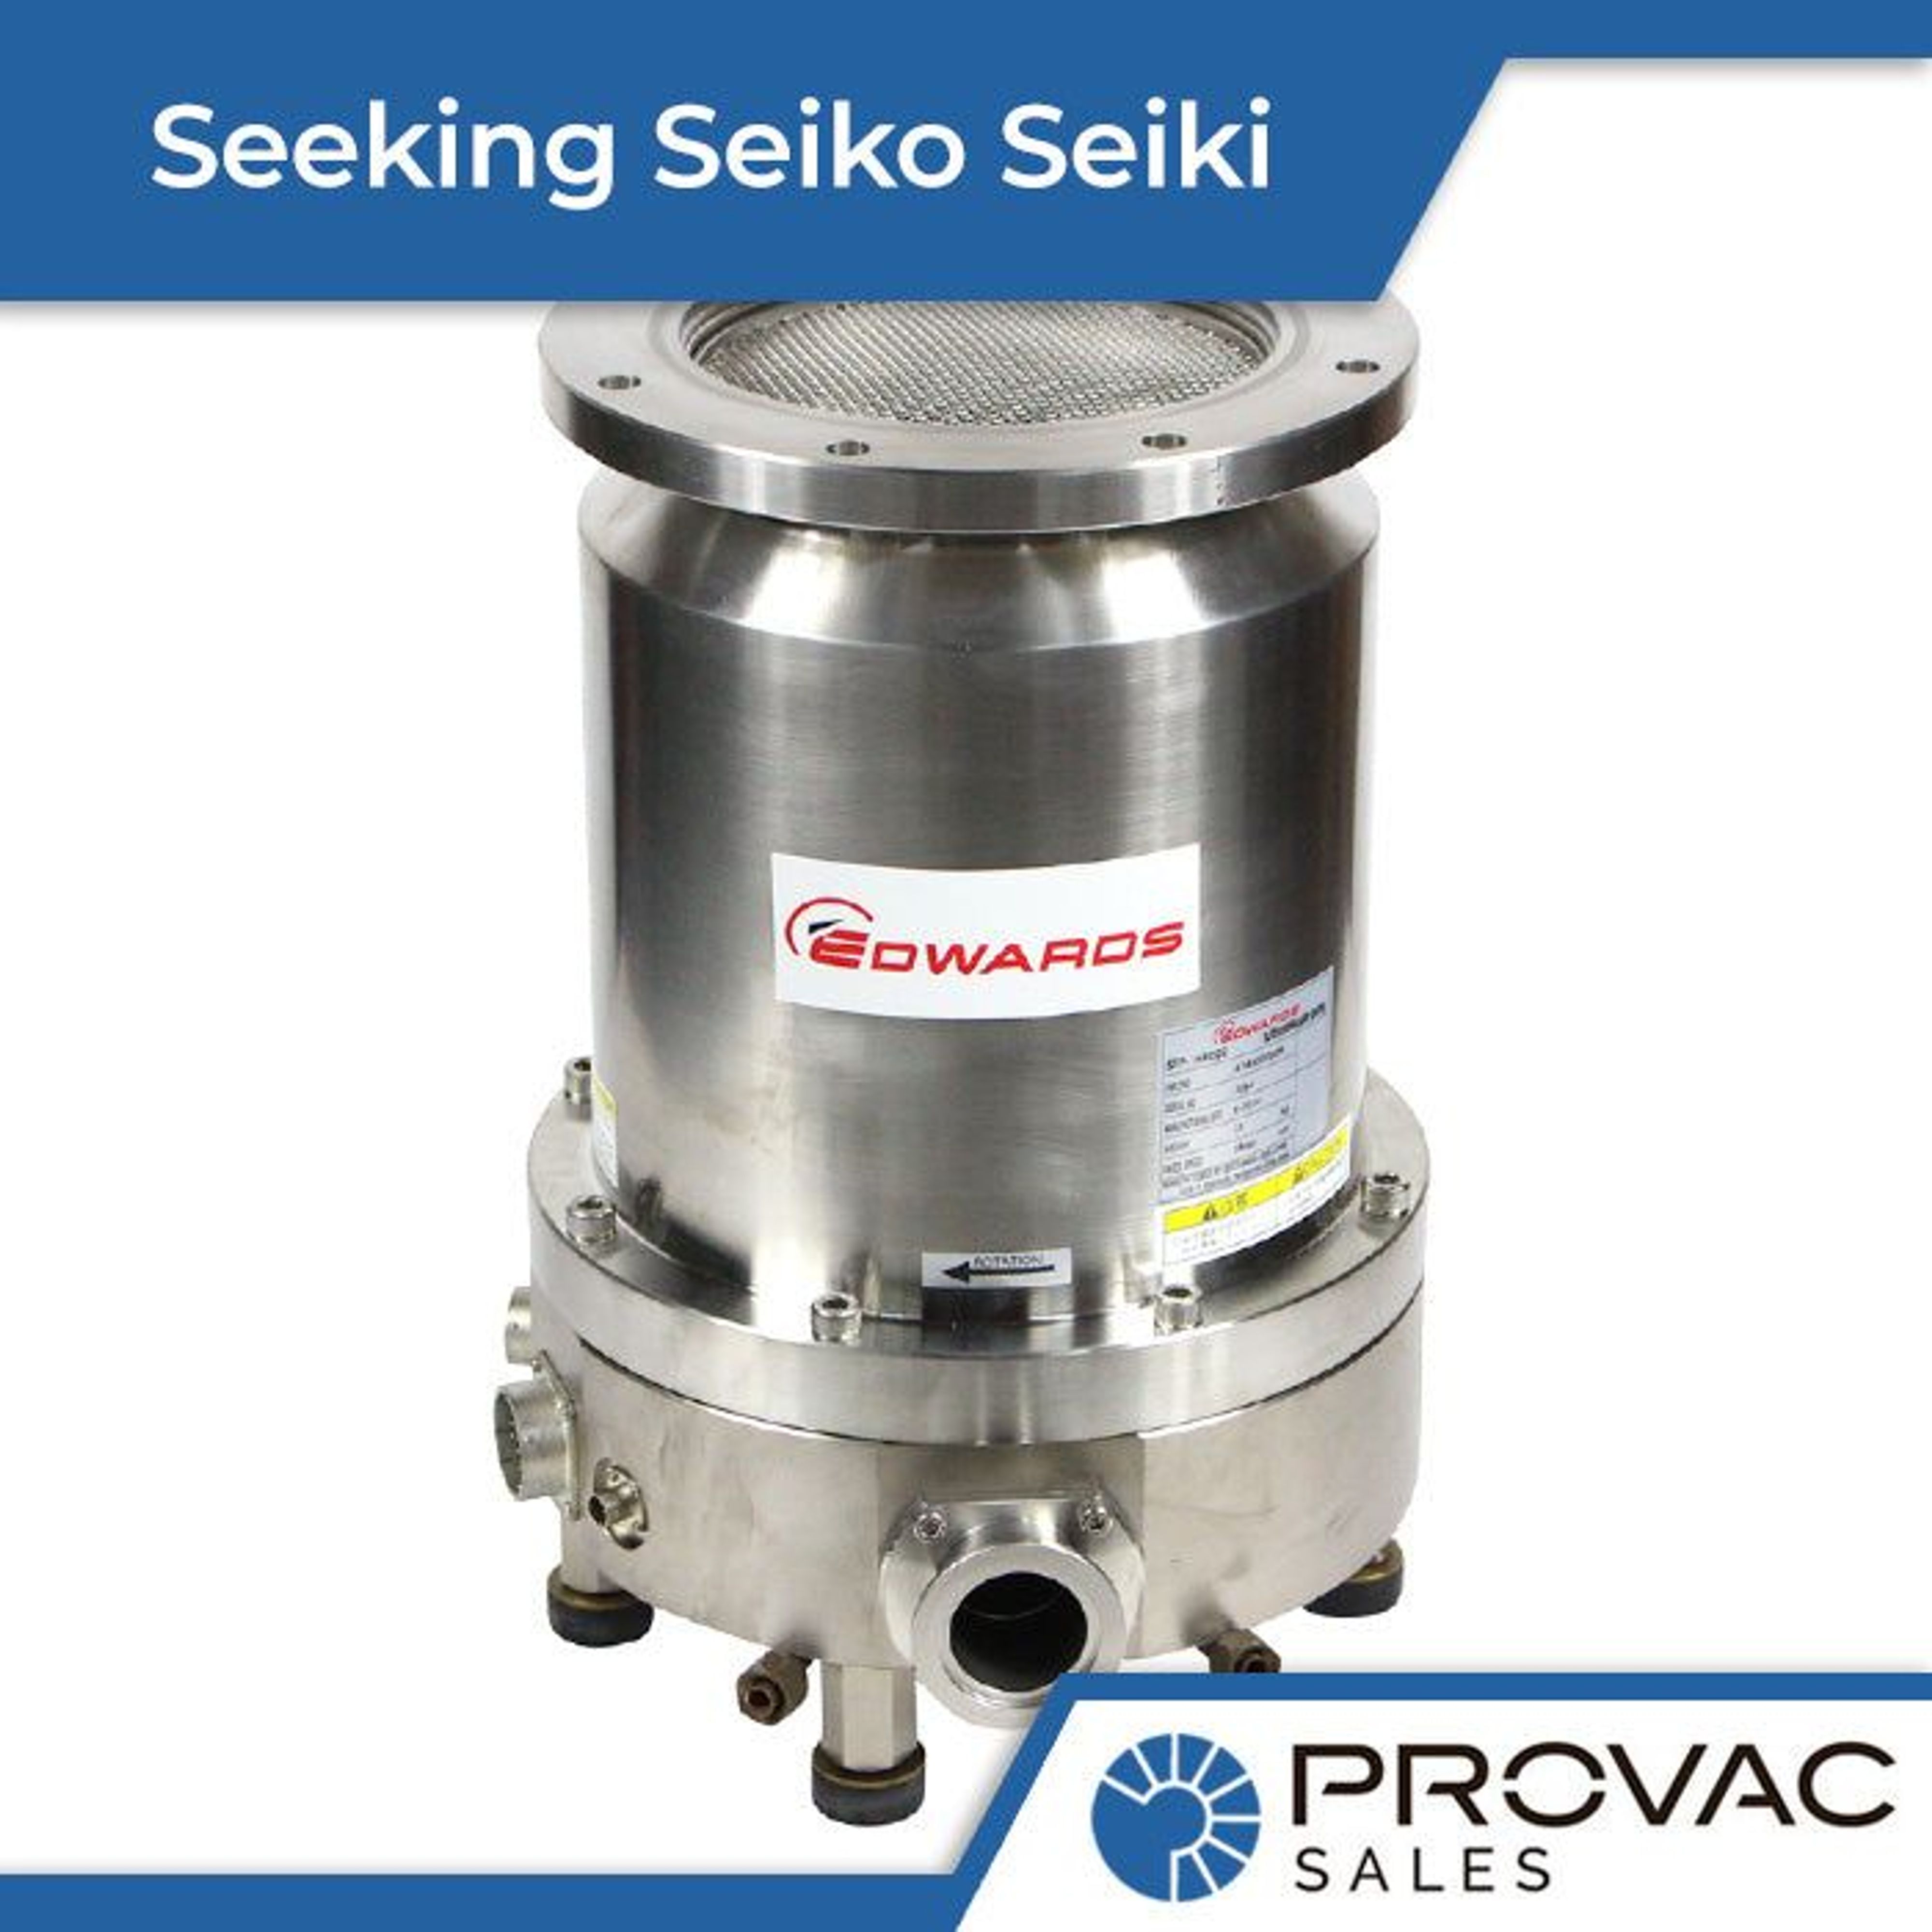 Provac Seeking Seiko Seiki STP-H600C, STP-H1000C Background